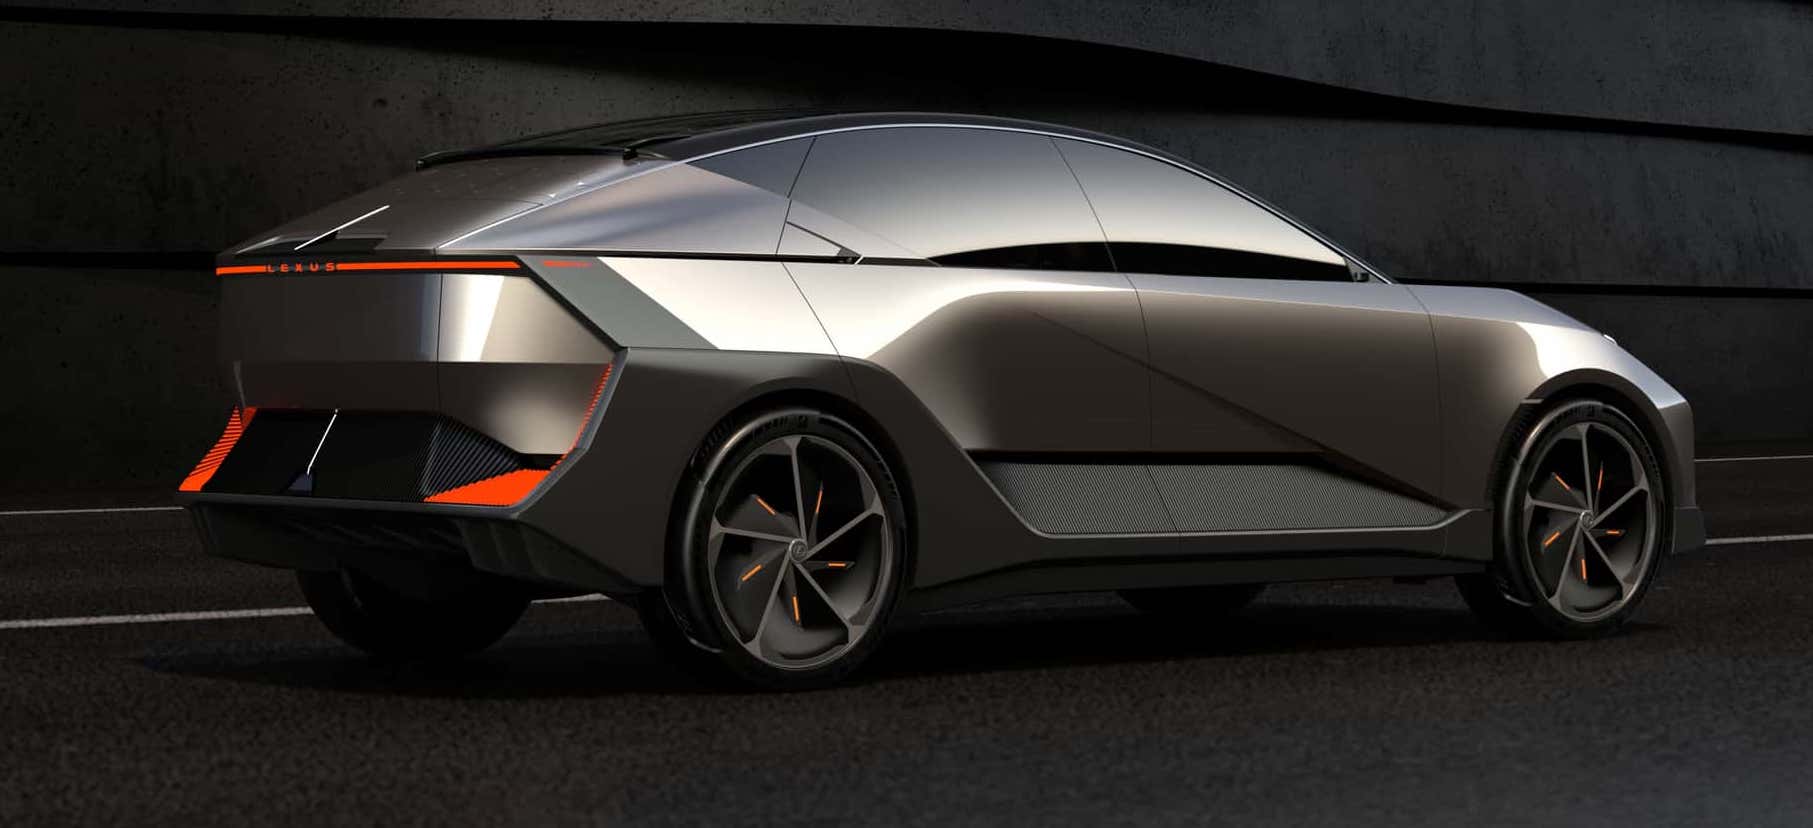 Lexus LF-ZL Concept: Beyond the Car - A Glimpse into the Future of Flagship EVs